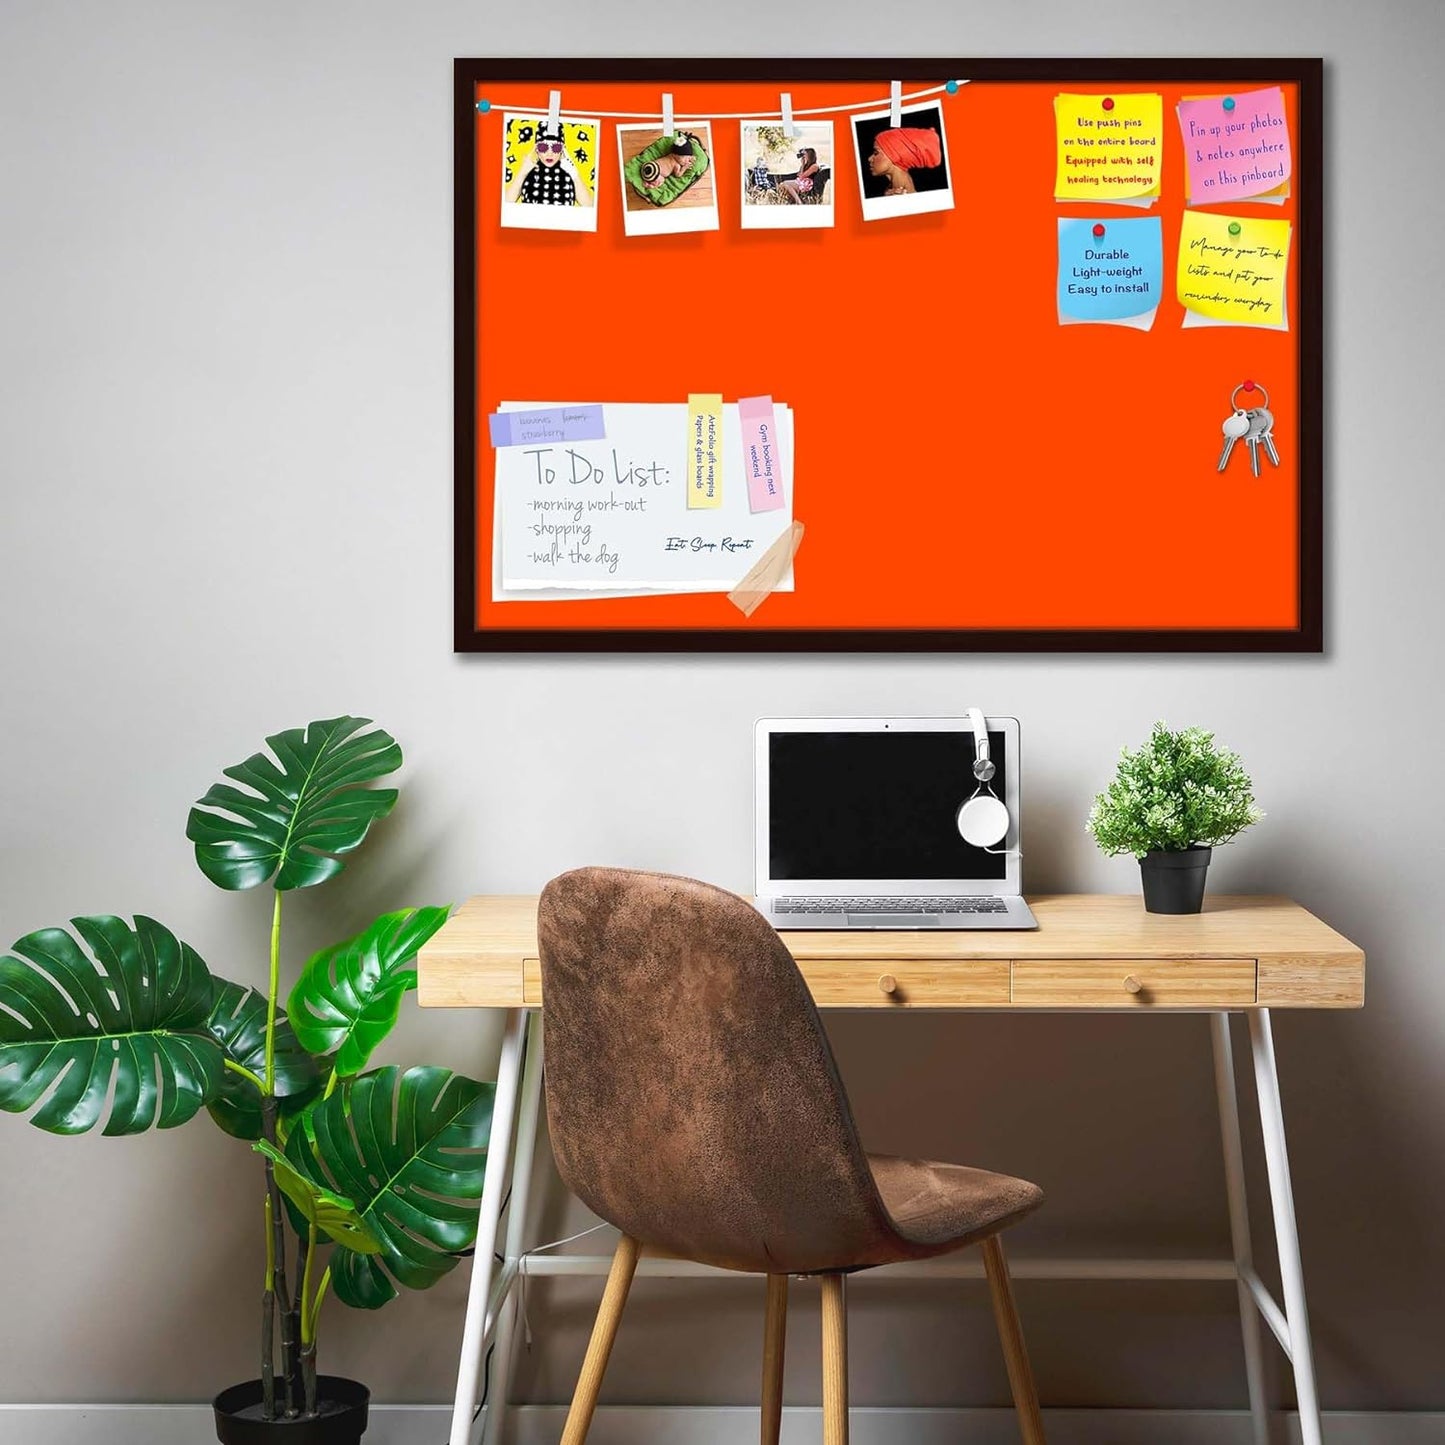 Digismart Noticeboard Nova Channel (Orange) for Office, Home & School Aluminum Frame (Pack of 1) (Non Magnetic)